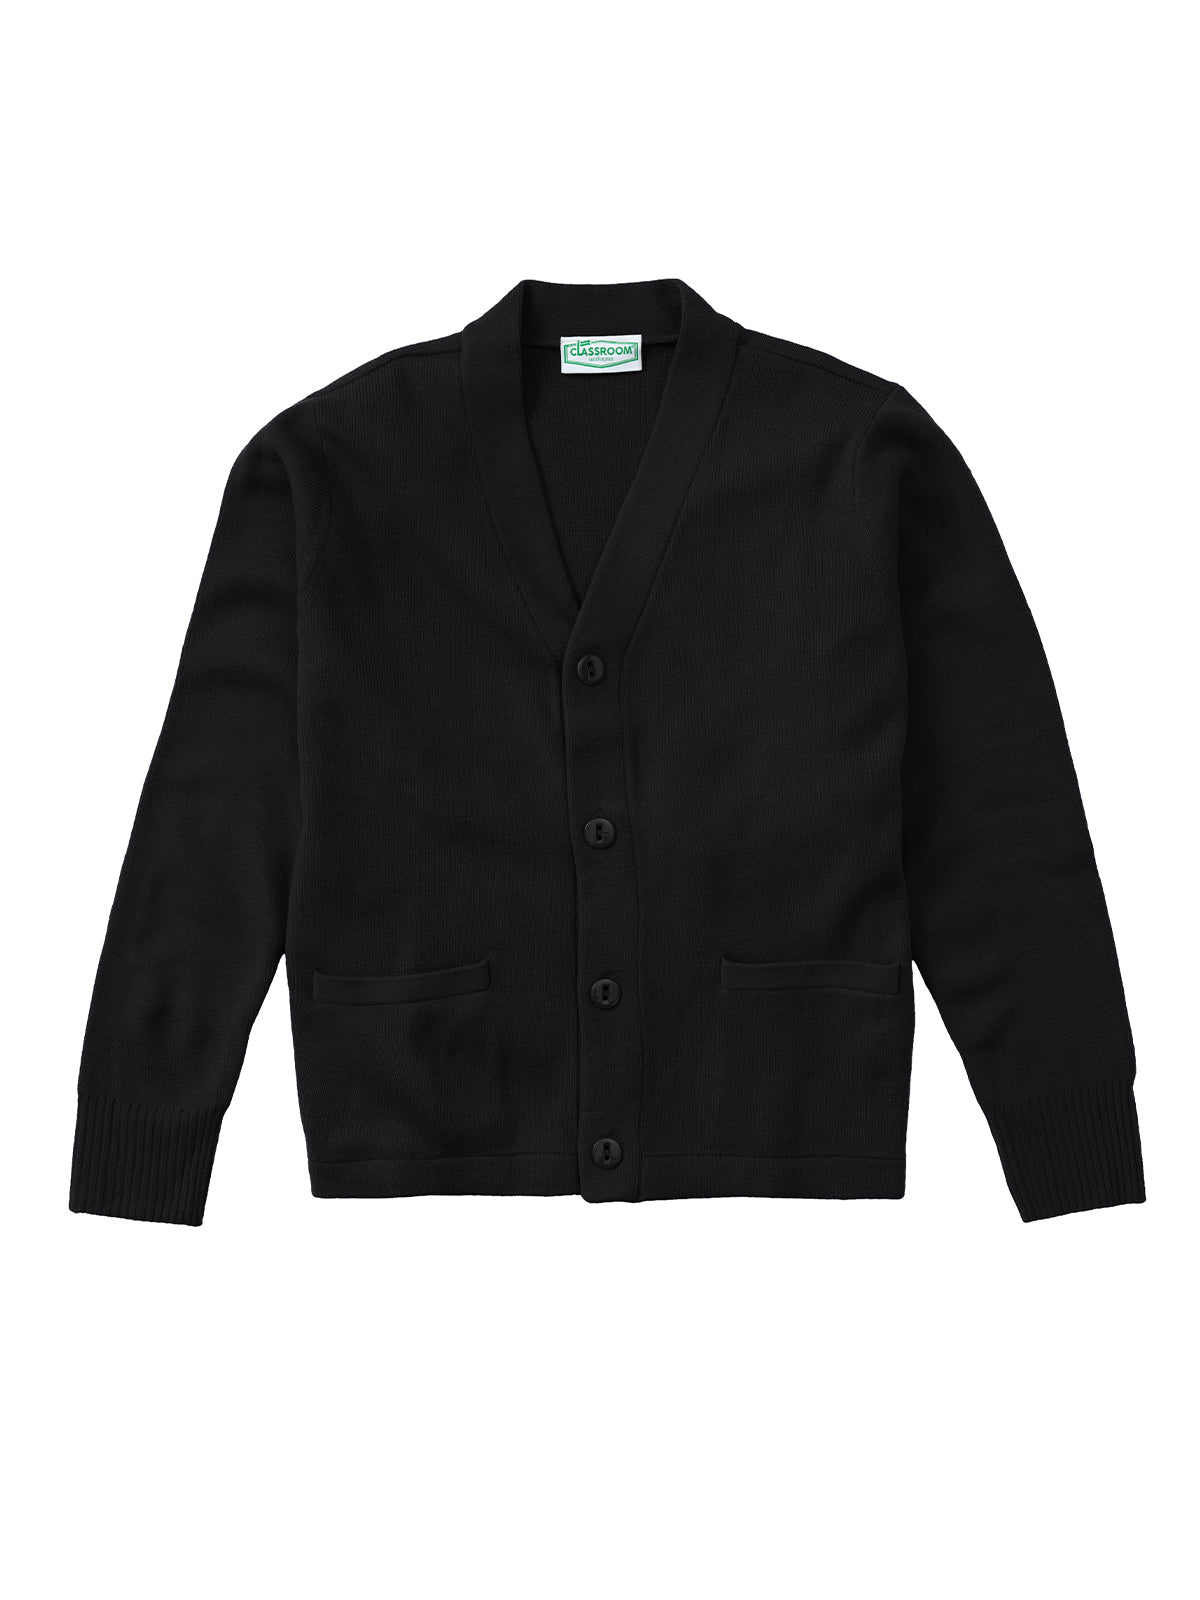 Adult Unisex Cardigan Sweater - 56434 - Black